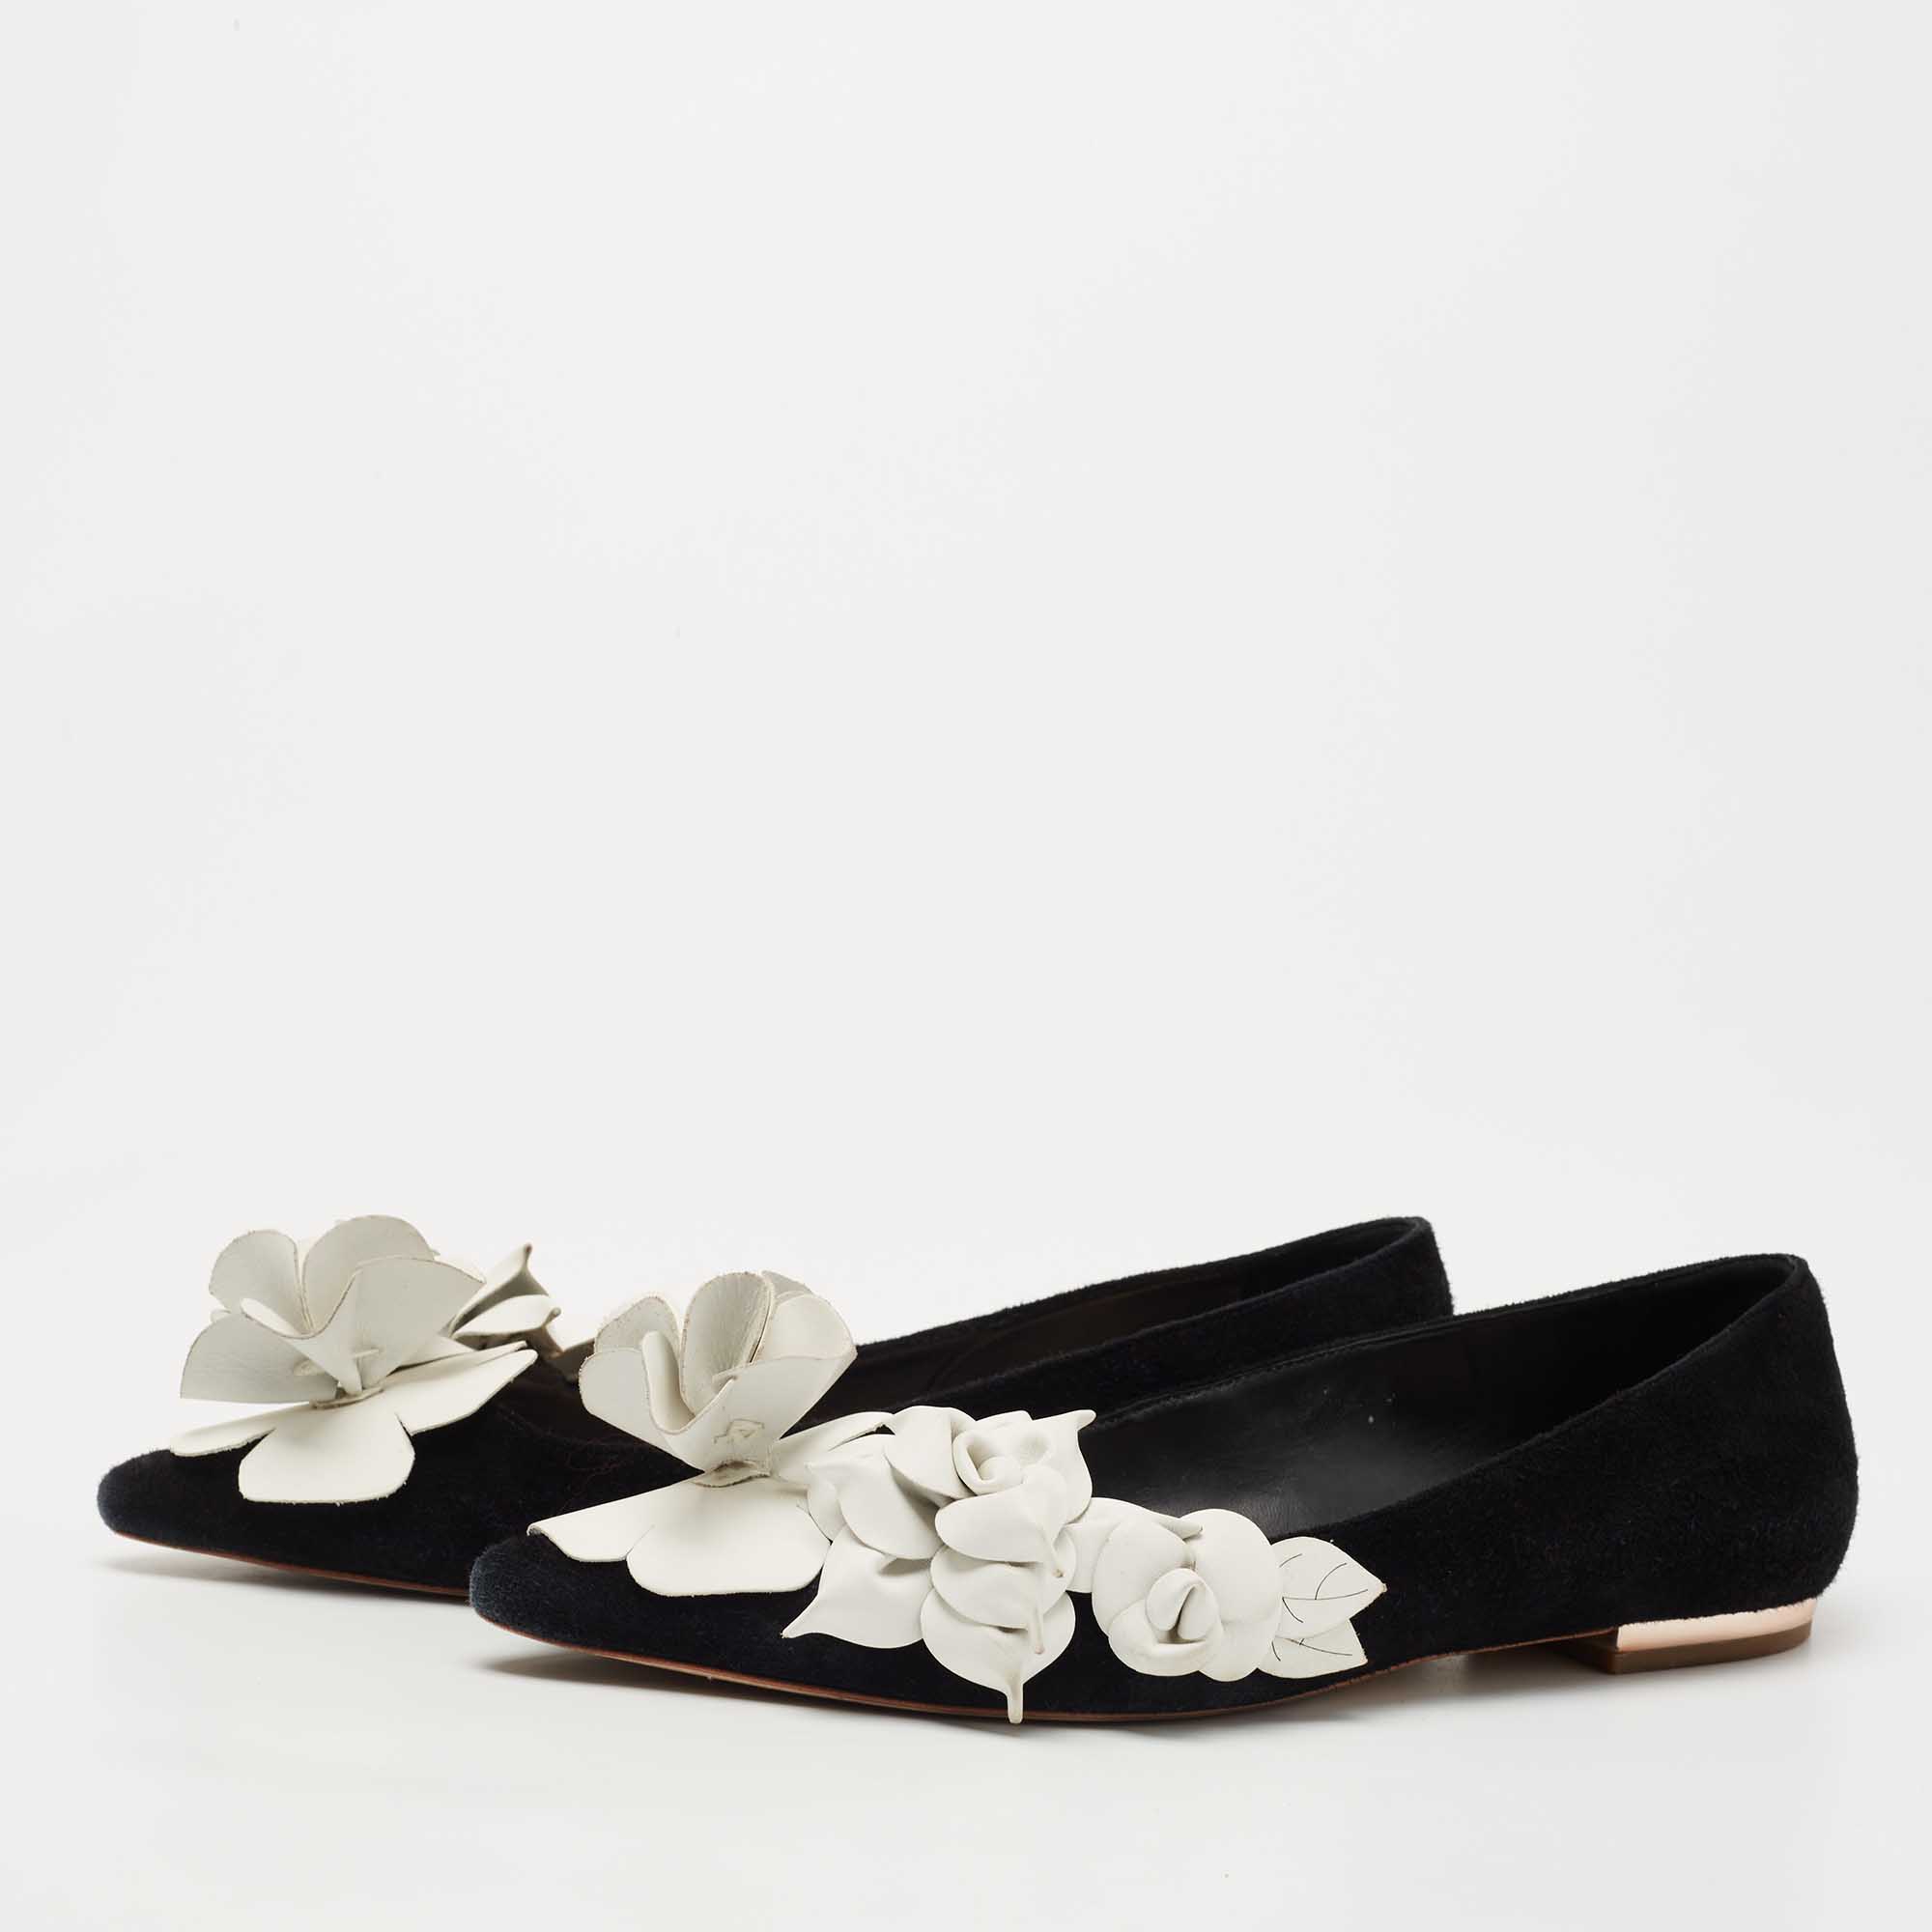 

Sophia Webster Black/White Suede and Leather Floral Applique Ballet Flats Size